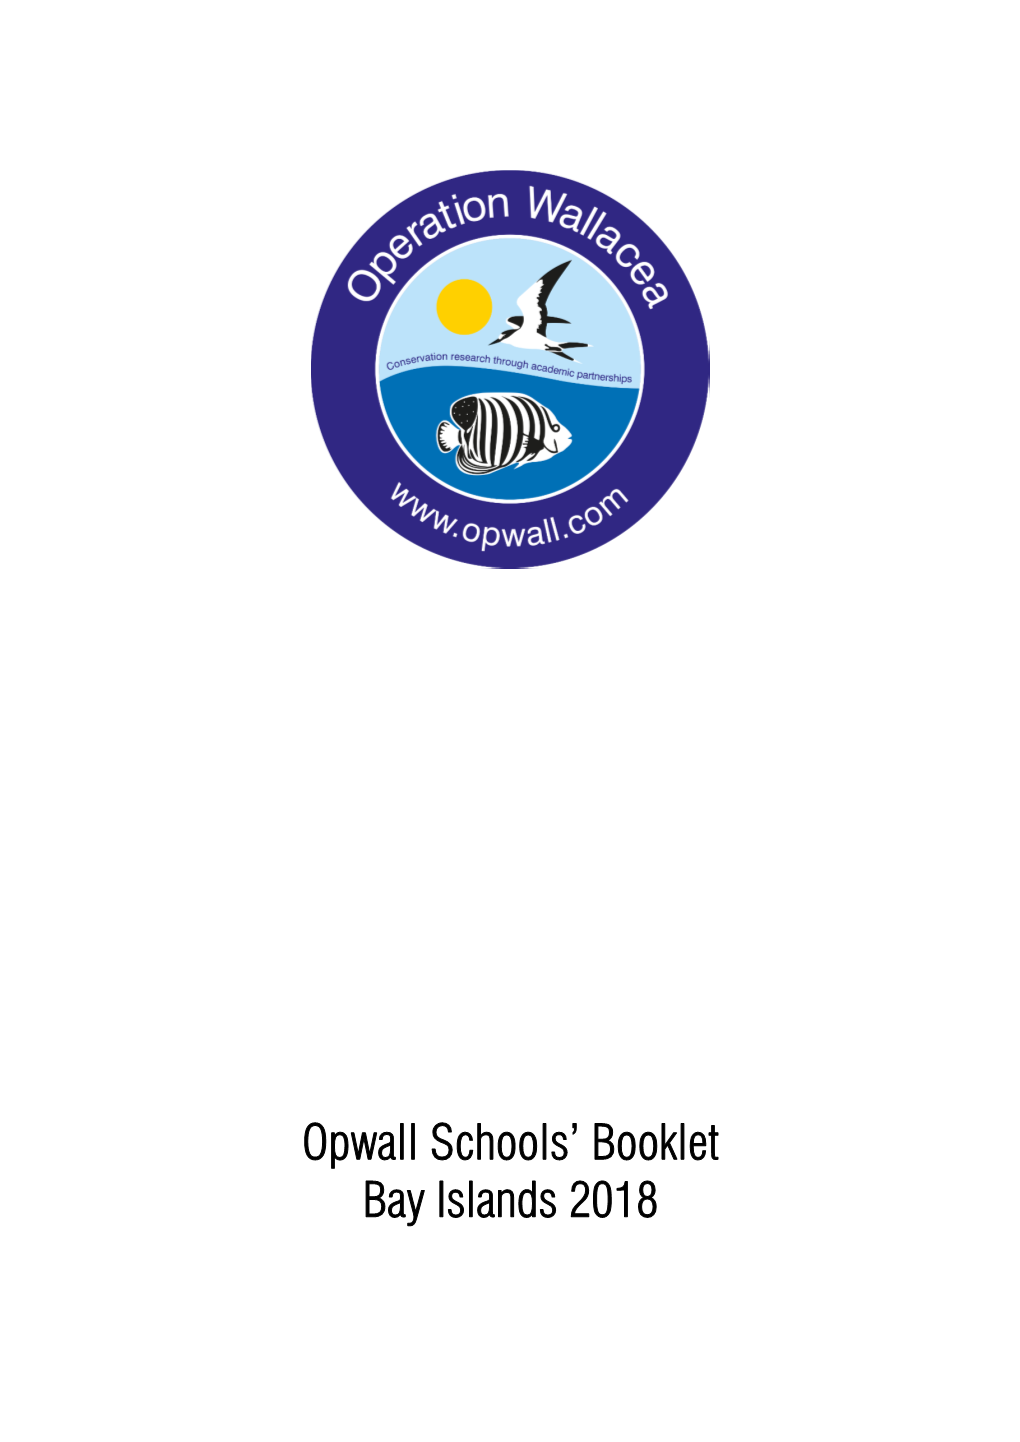 Opwall Schools' Booklet Bay Islands 2018